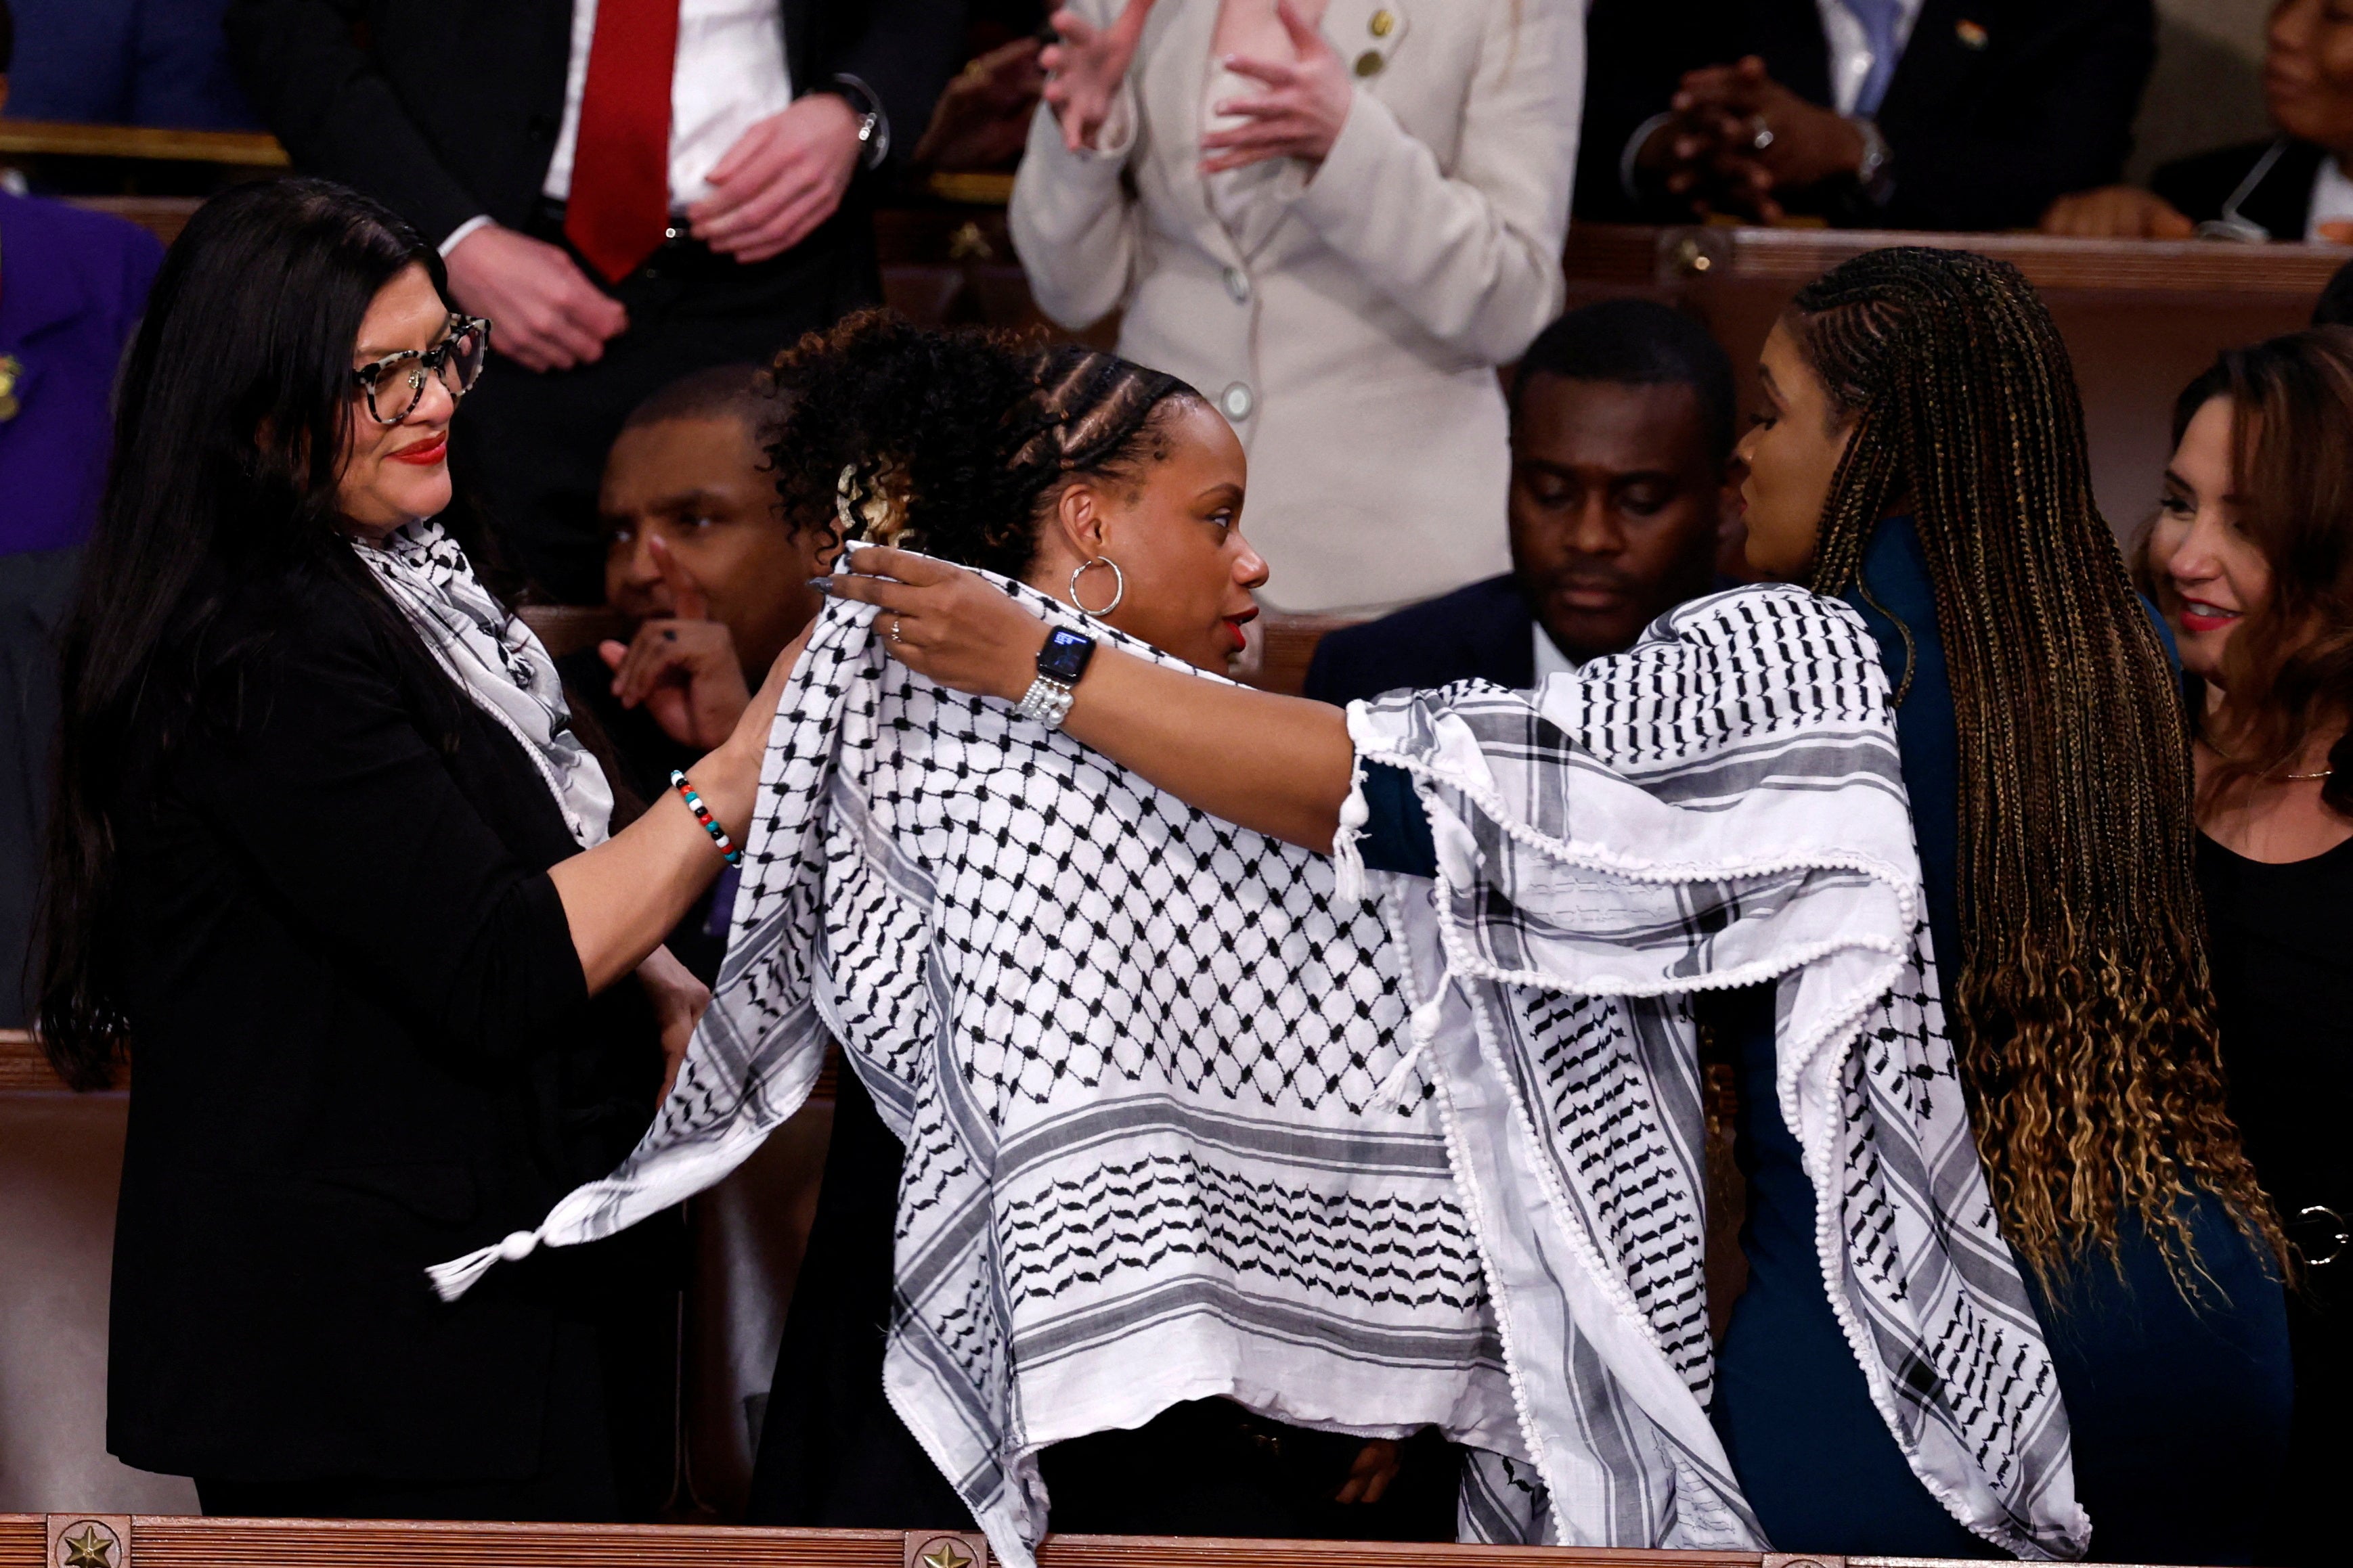 Democrats Rashida Tlaib, Cori Bush and Summer Lee put on Palestinian keffiyehs